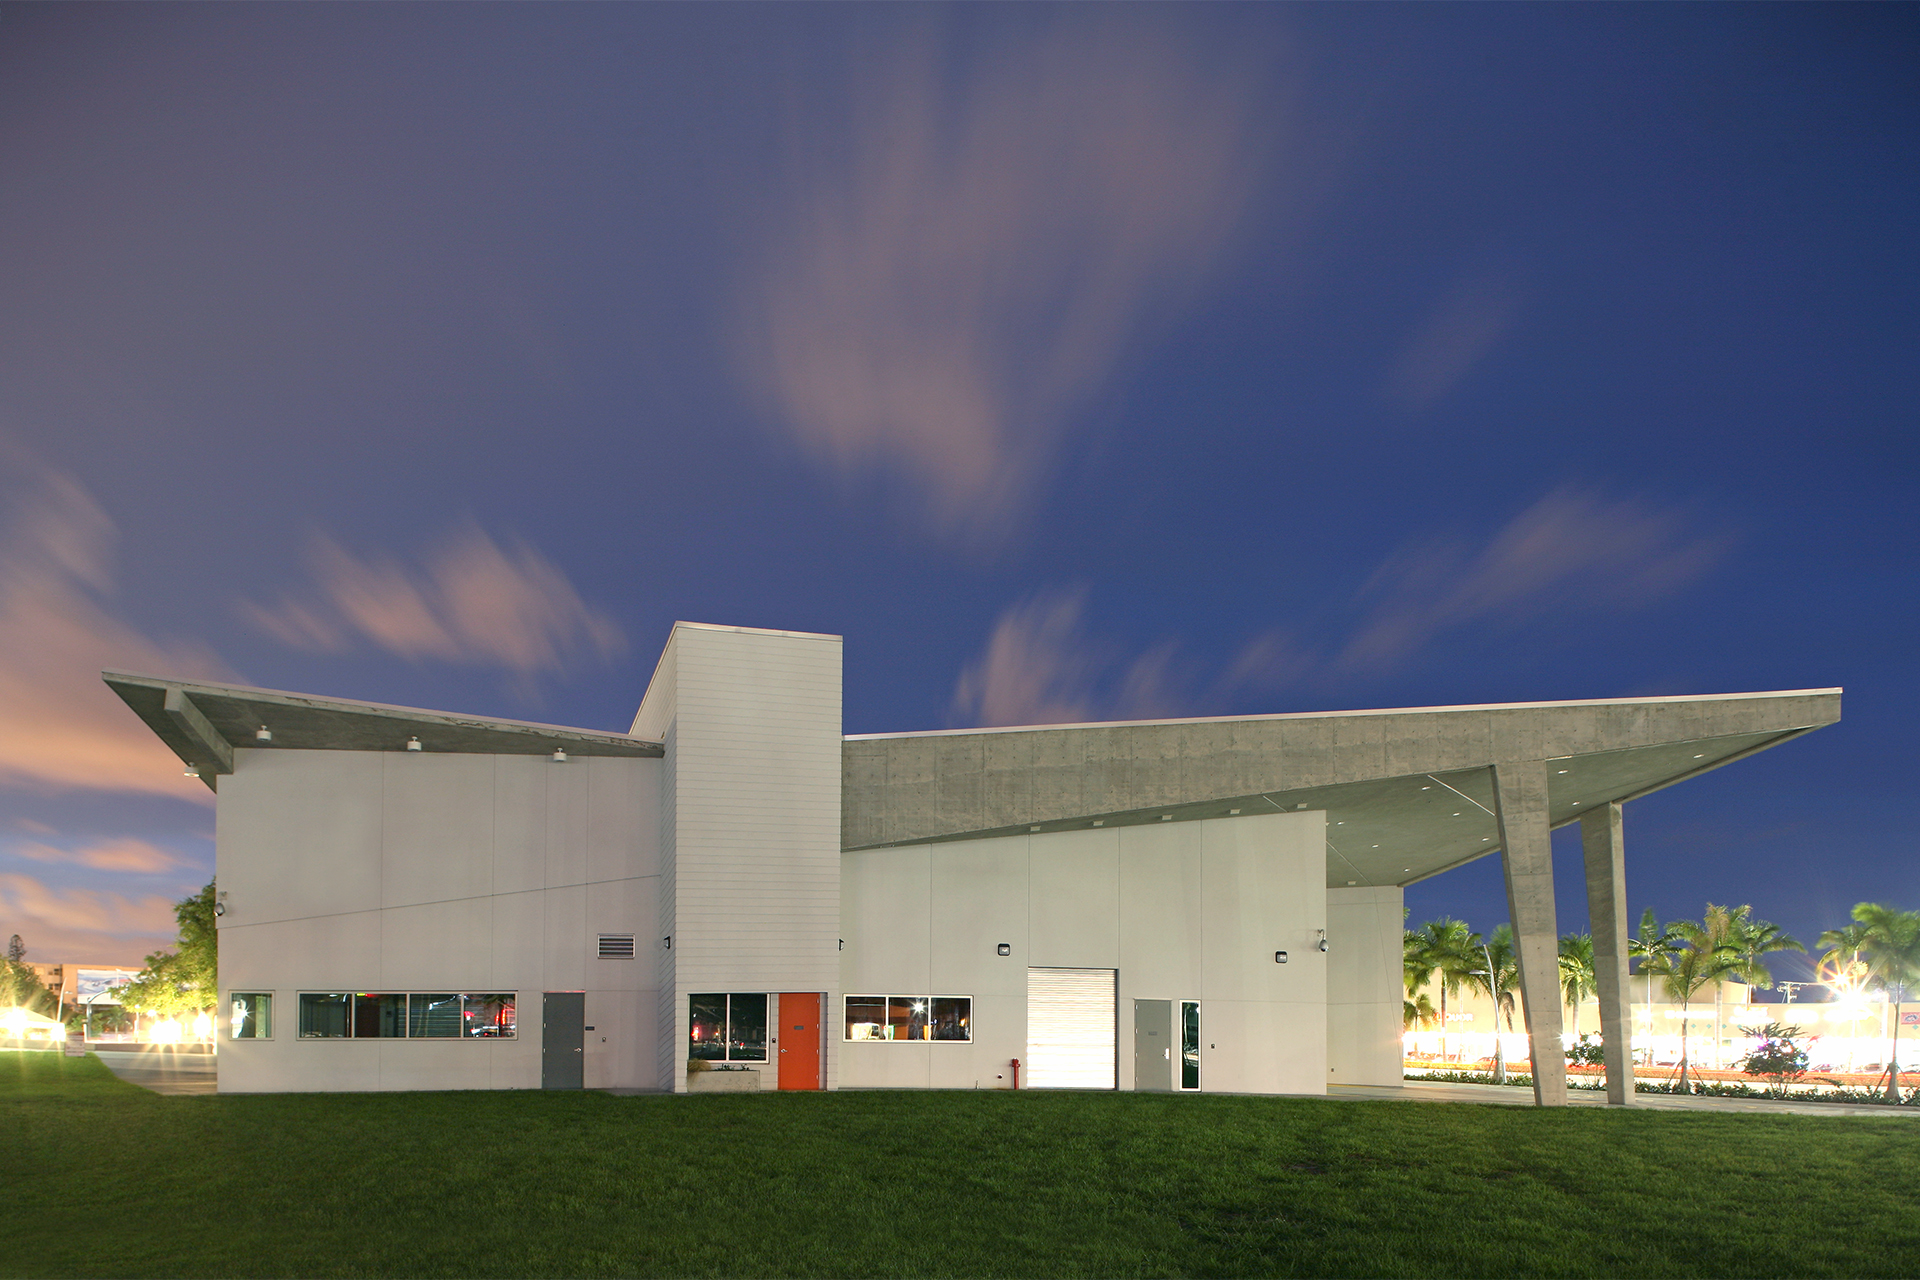 Art House: The Inspiring Architecture of Art Studios